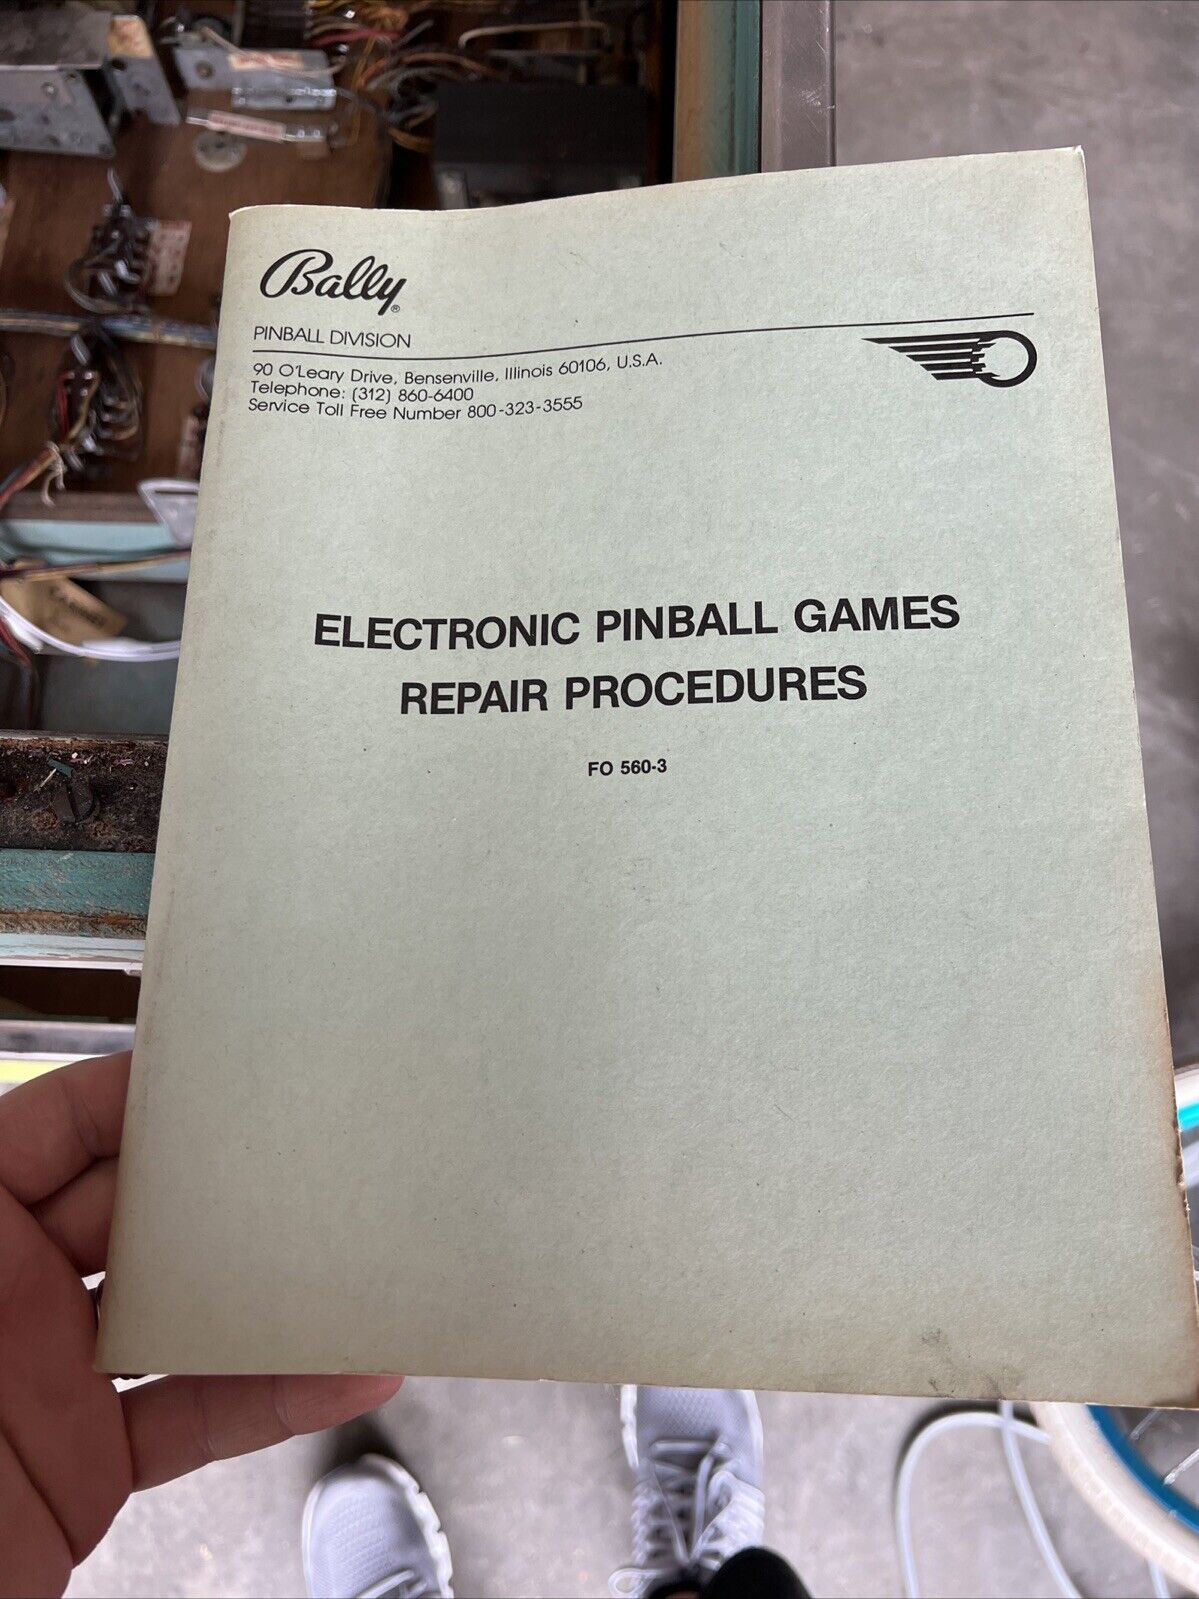 Bally ELECTRONIC PINBALL GAMES REPAIR PROCEDURES Manual